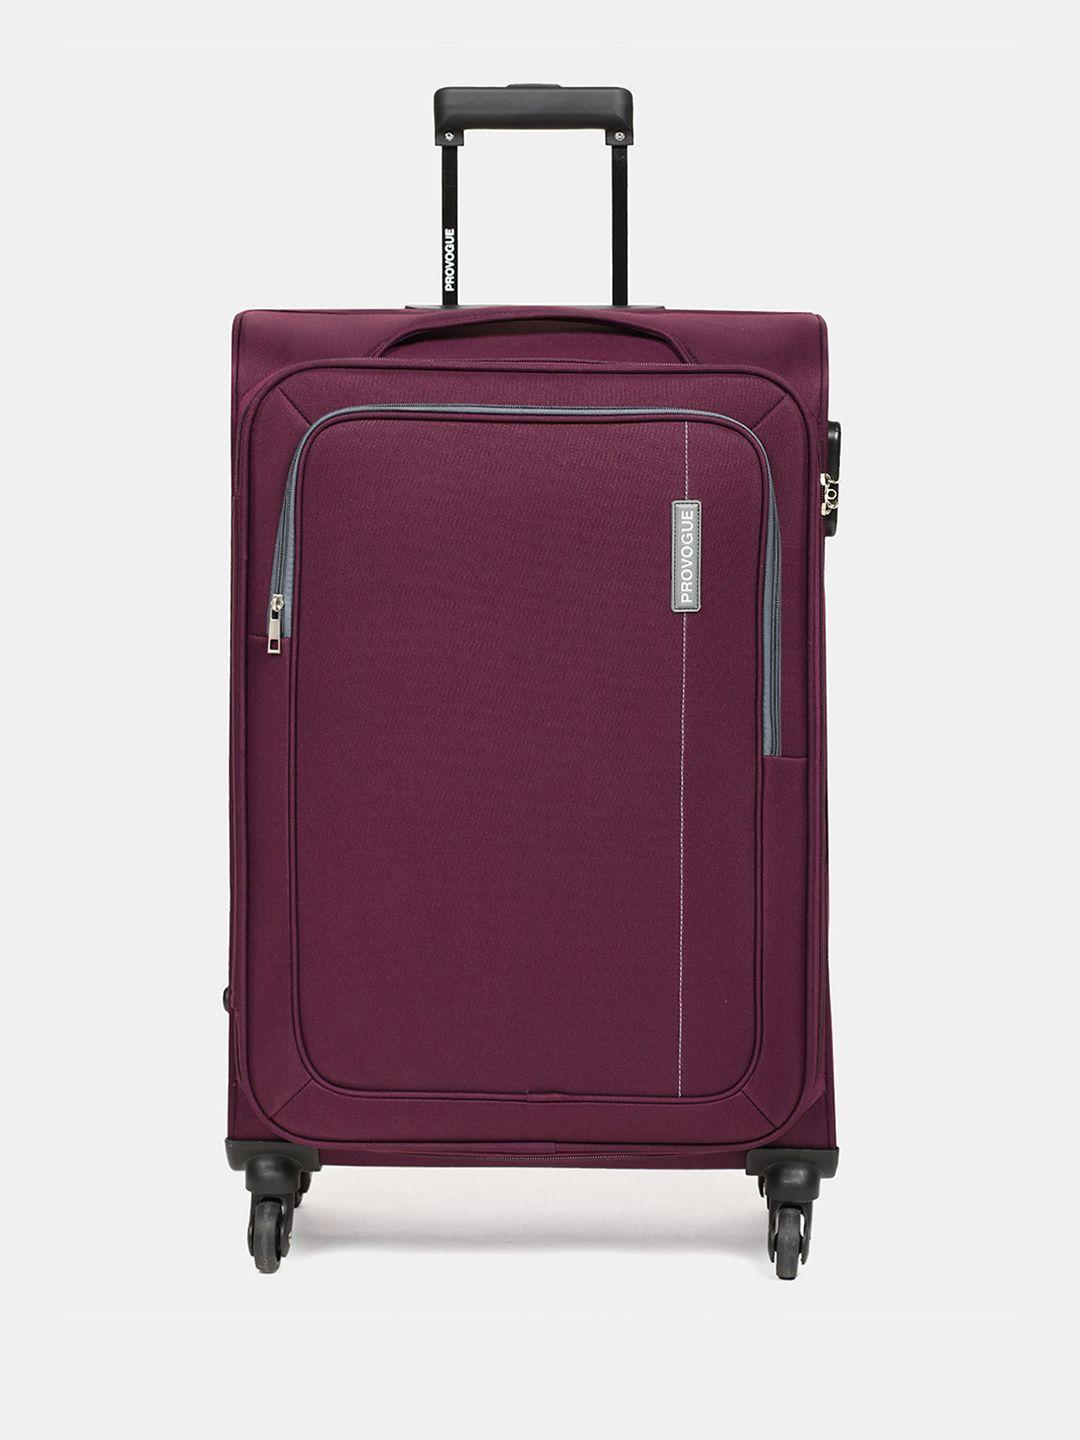 provogue unisex medium trolley suitcase